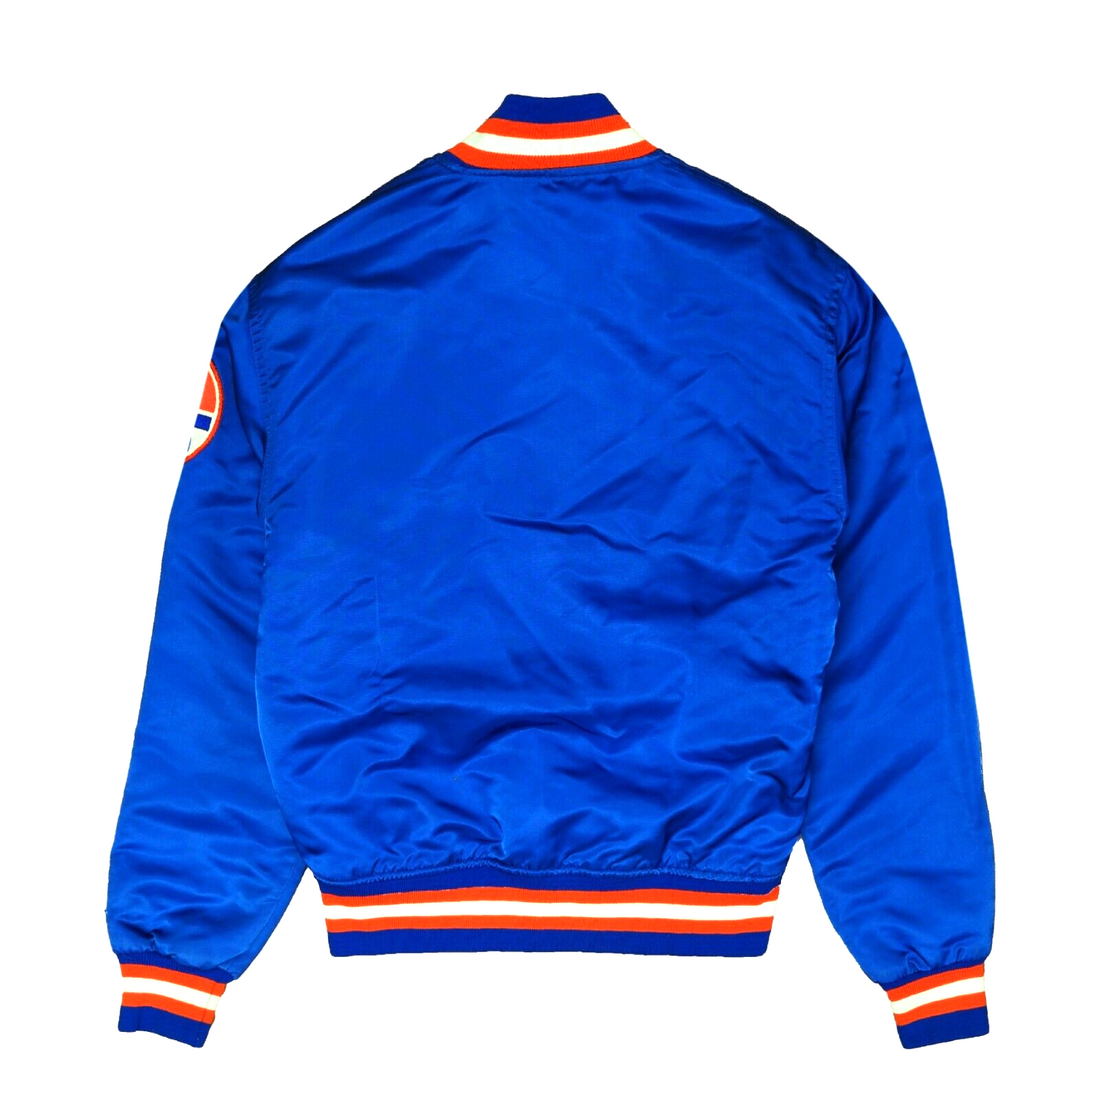 Vintage Starter Jacket New York Knicks 80's / 90's 